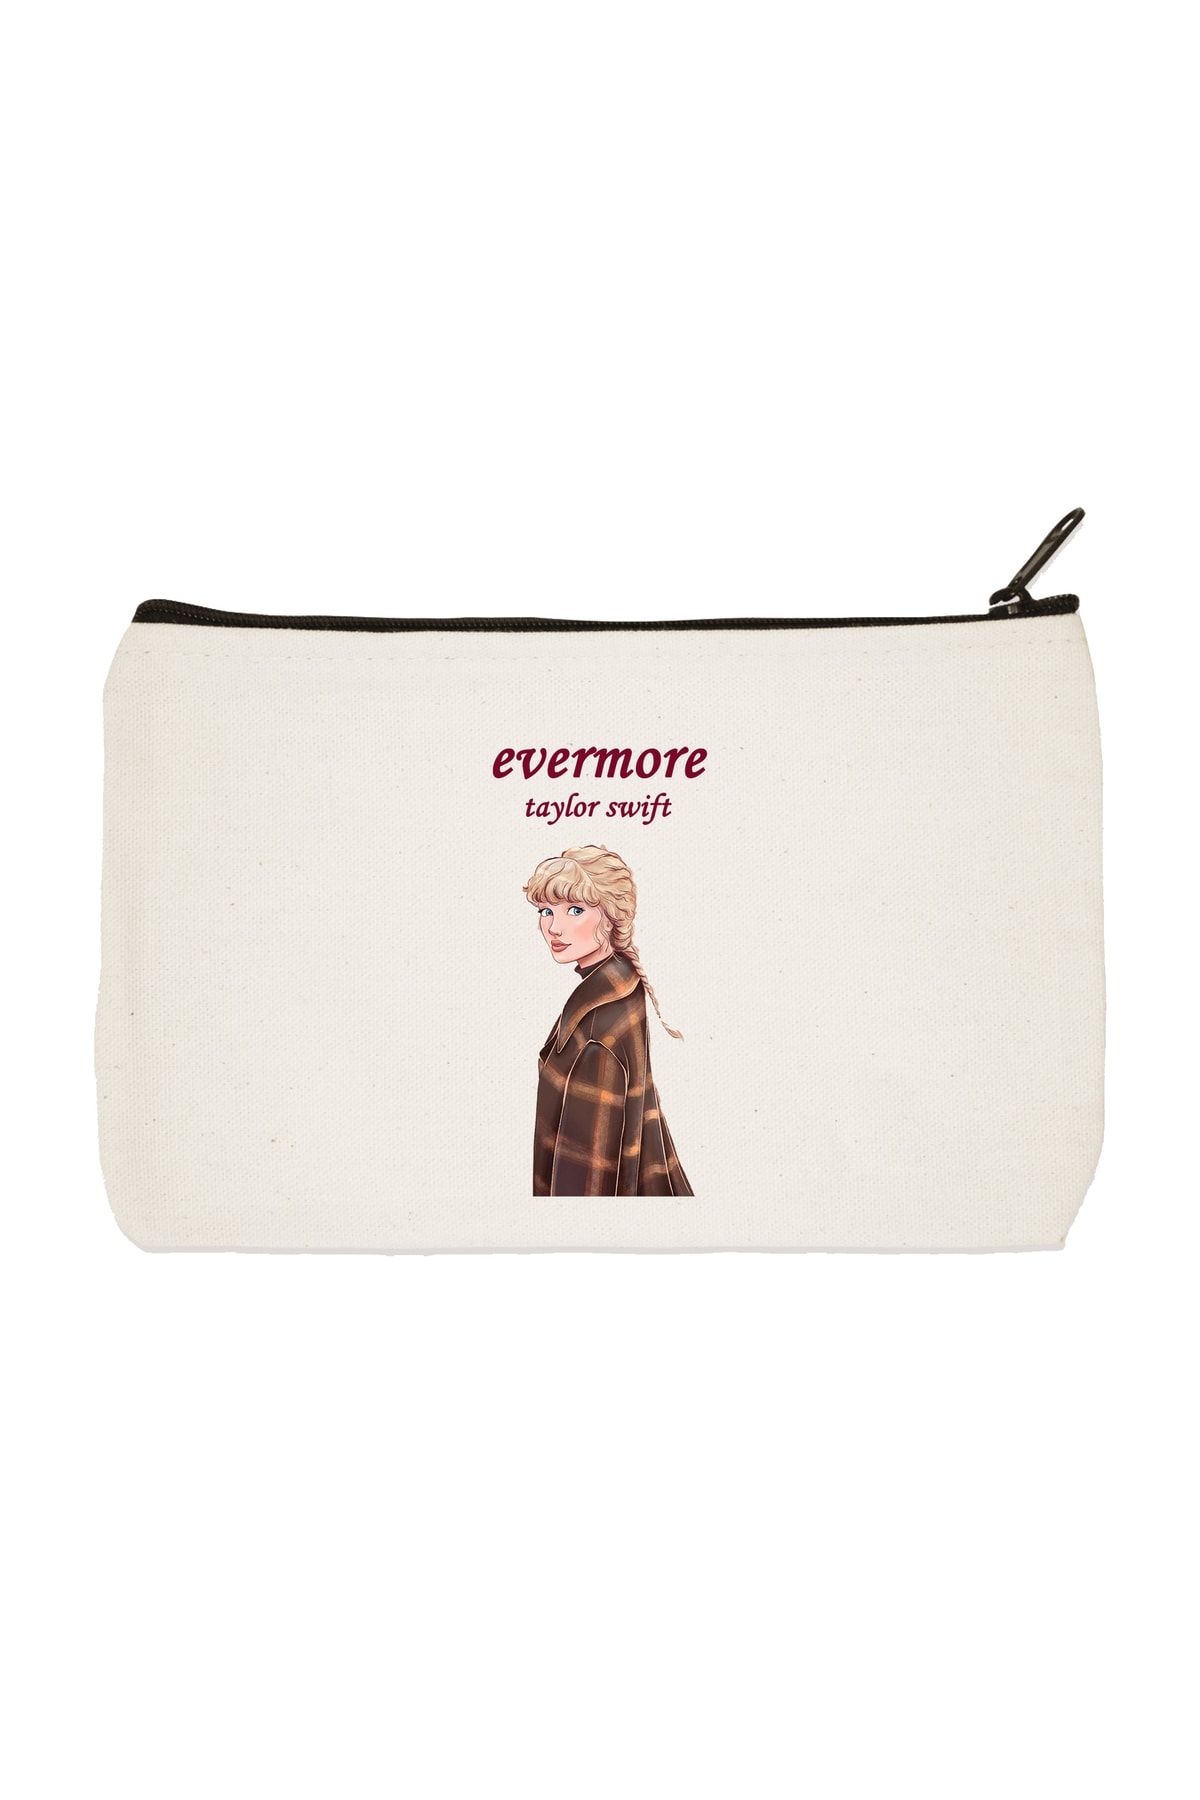 designedfy Clutch Taylor Swift Evermore Printed Cloth Makeup Bag, Pen  Holder, Handbag